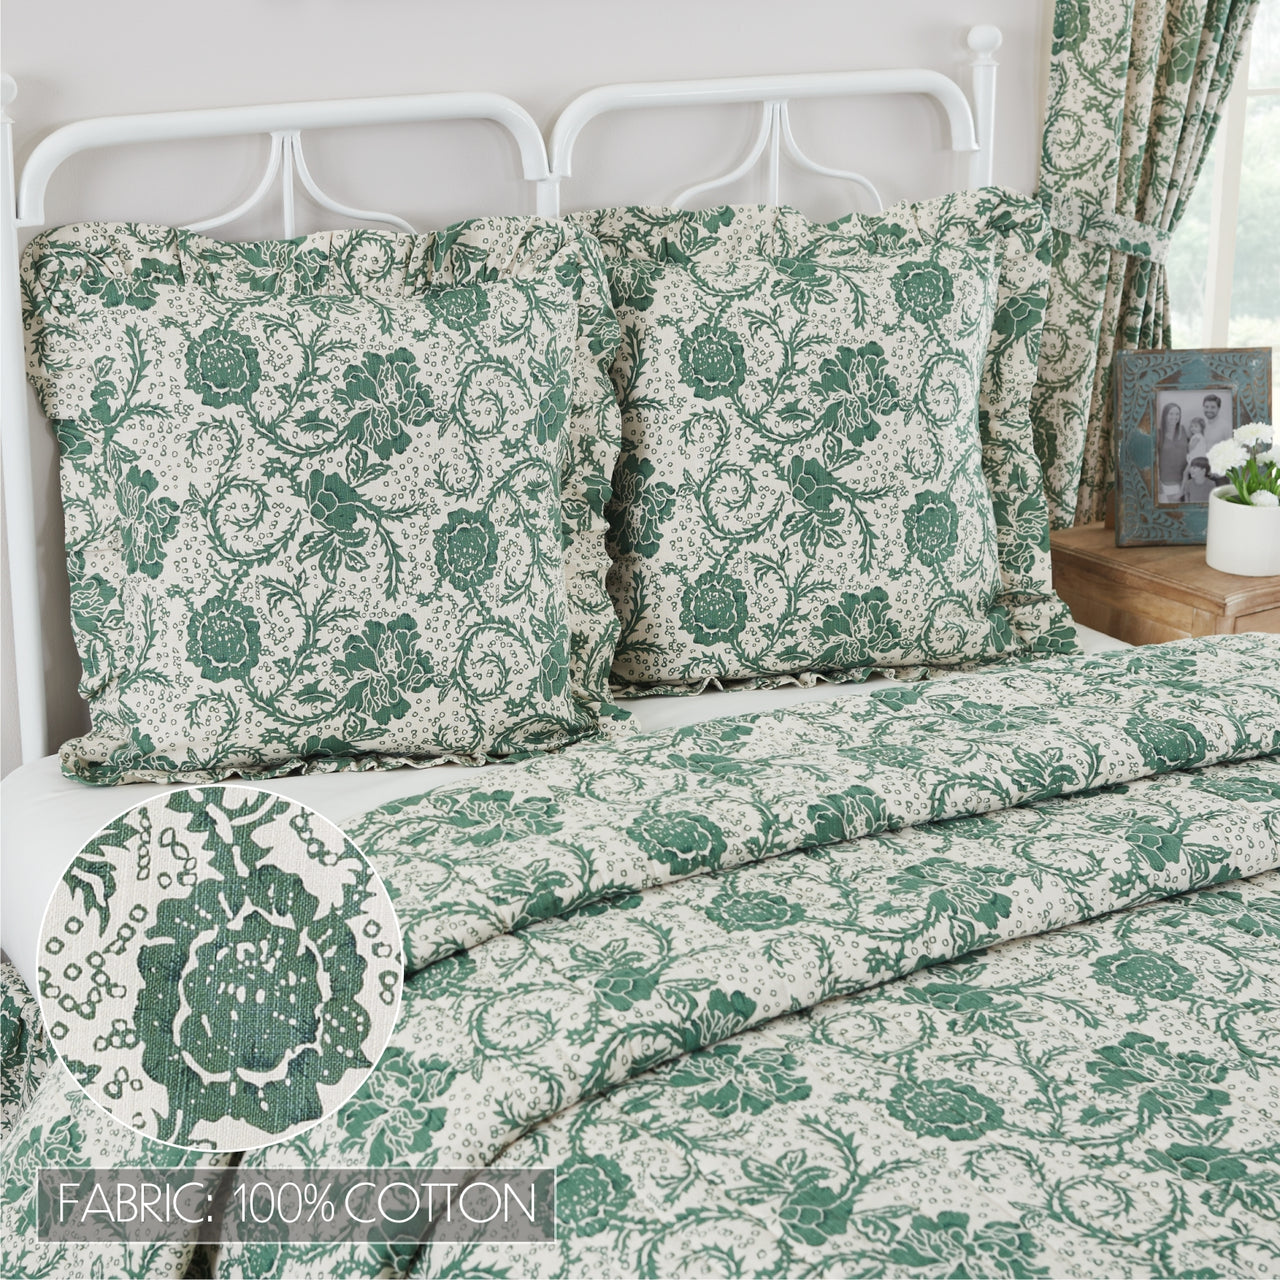 Dorset Green Floral Fabric Euro Sham 26x26 VHC Brands